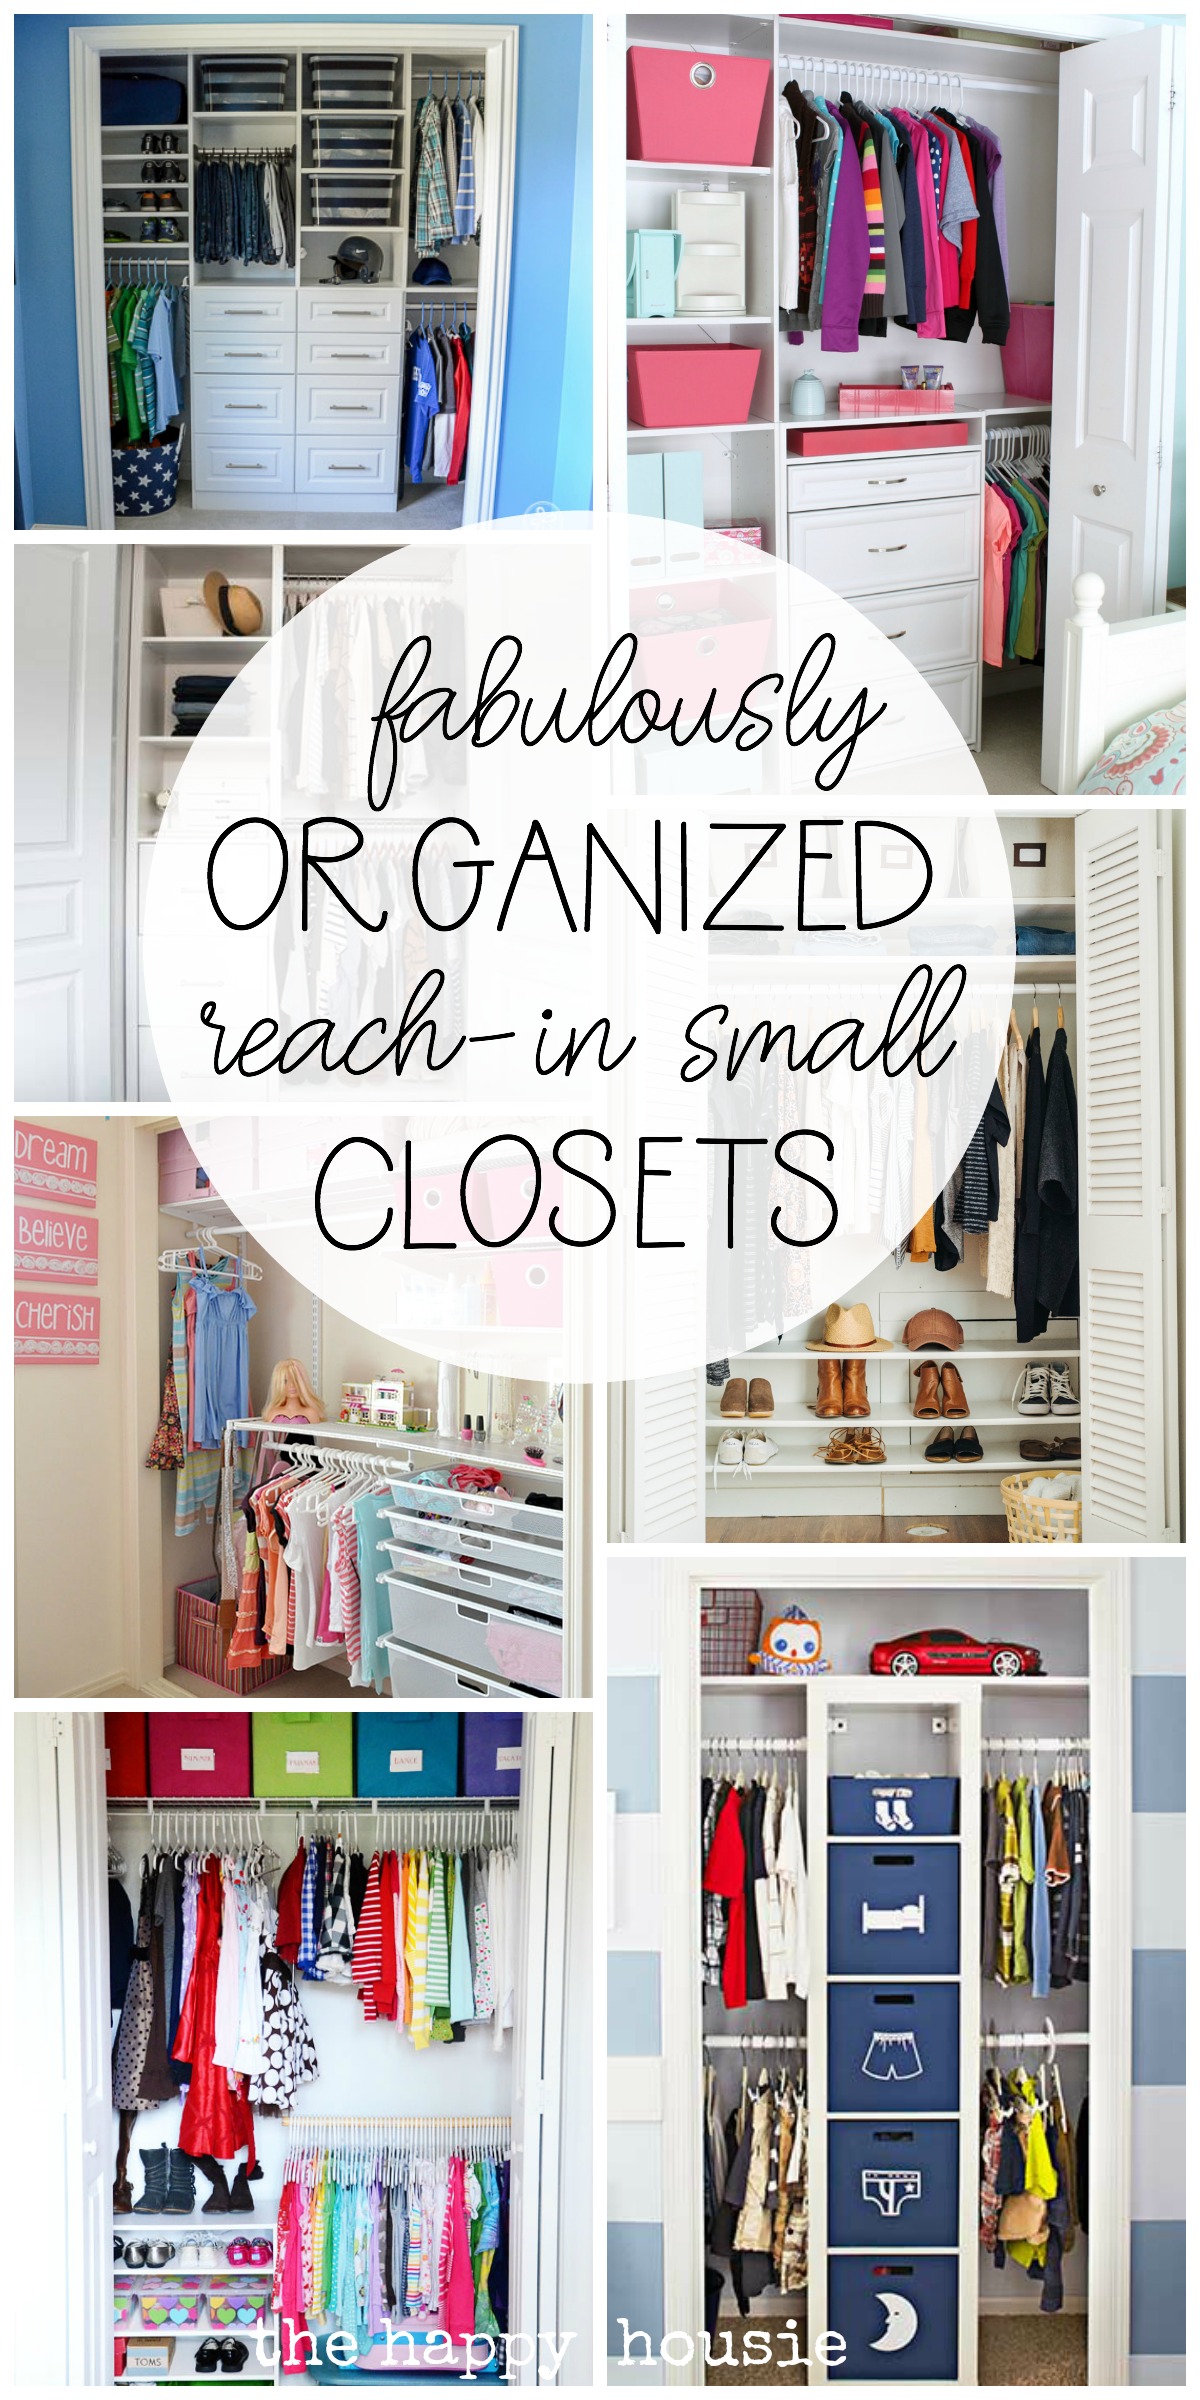 How to Organize a Small Reach-in Closet for Multi-Purpose Storage